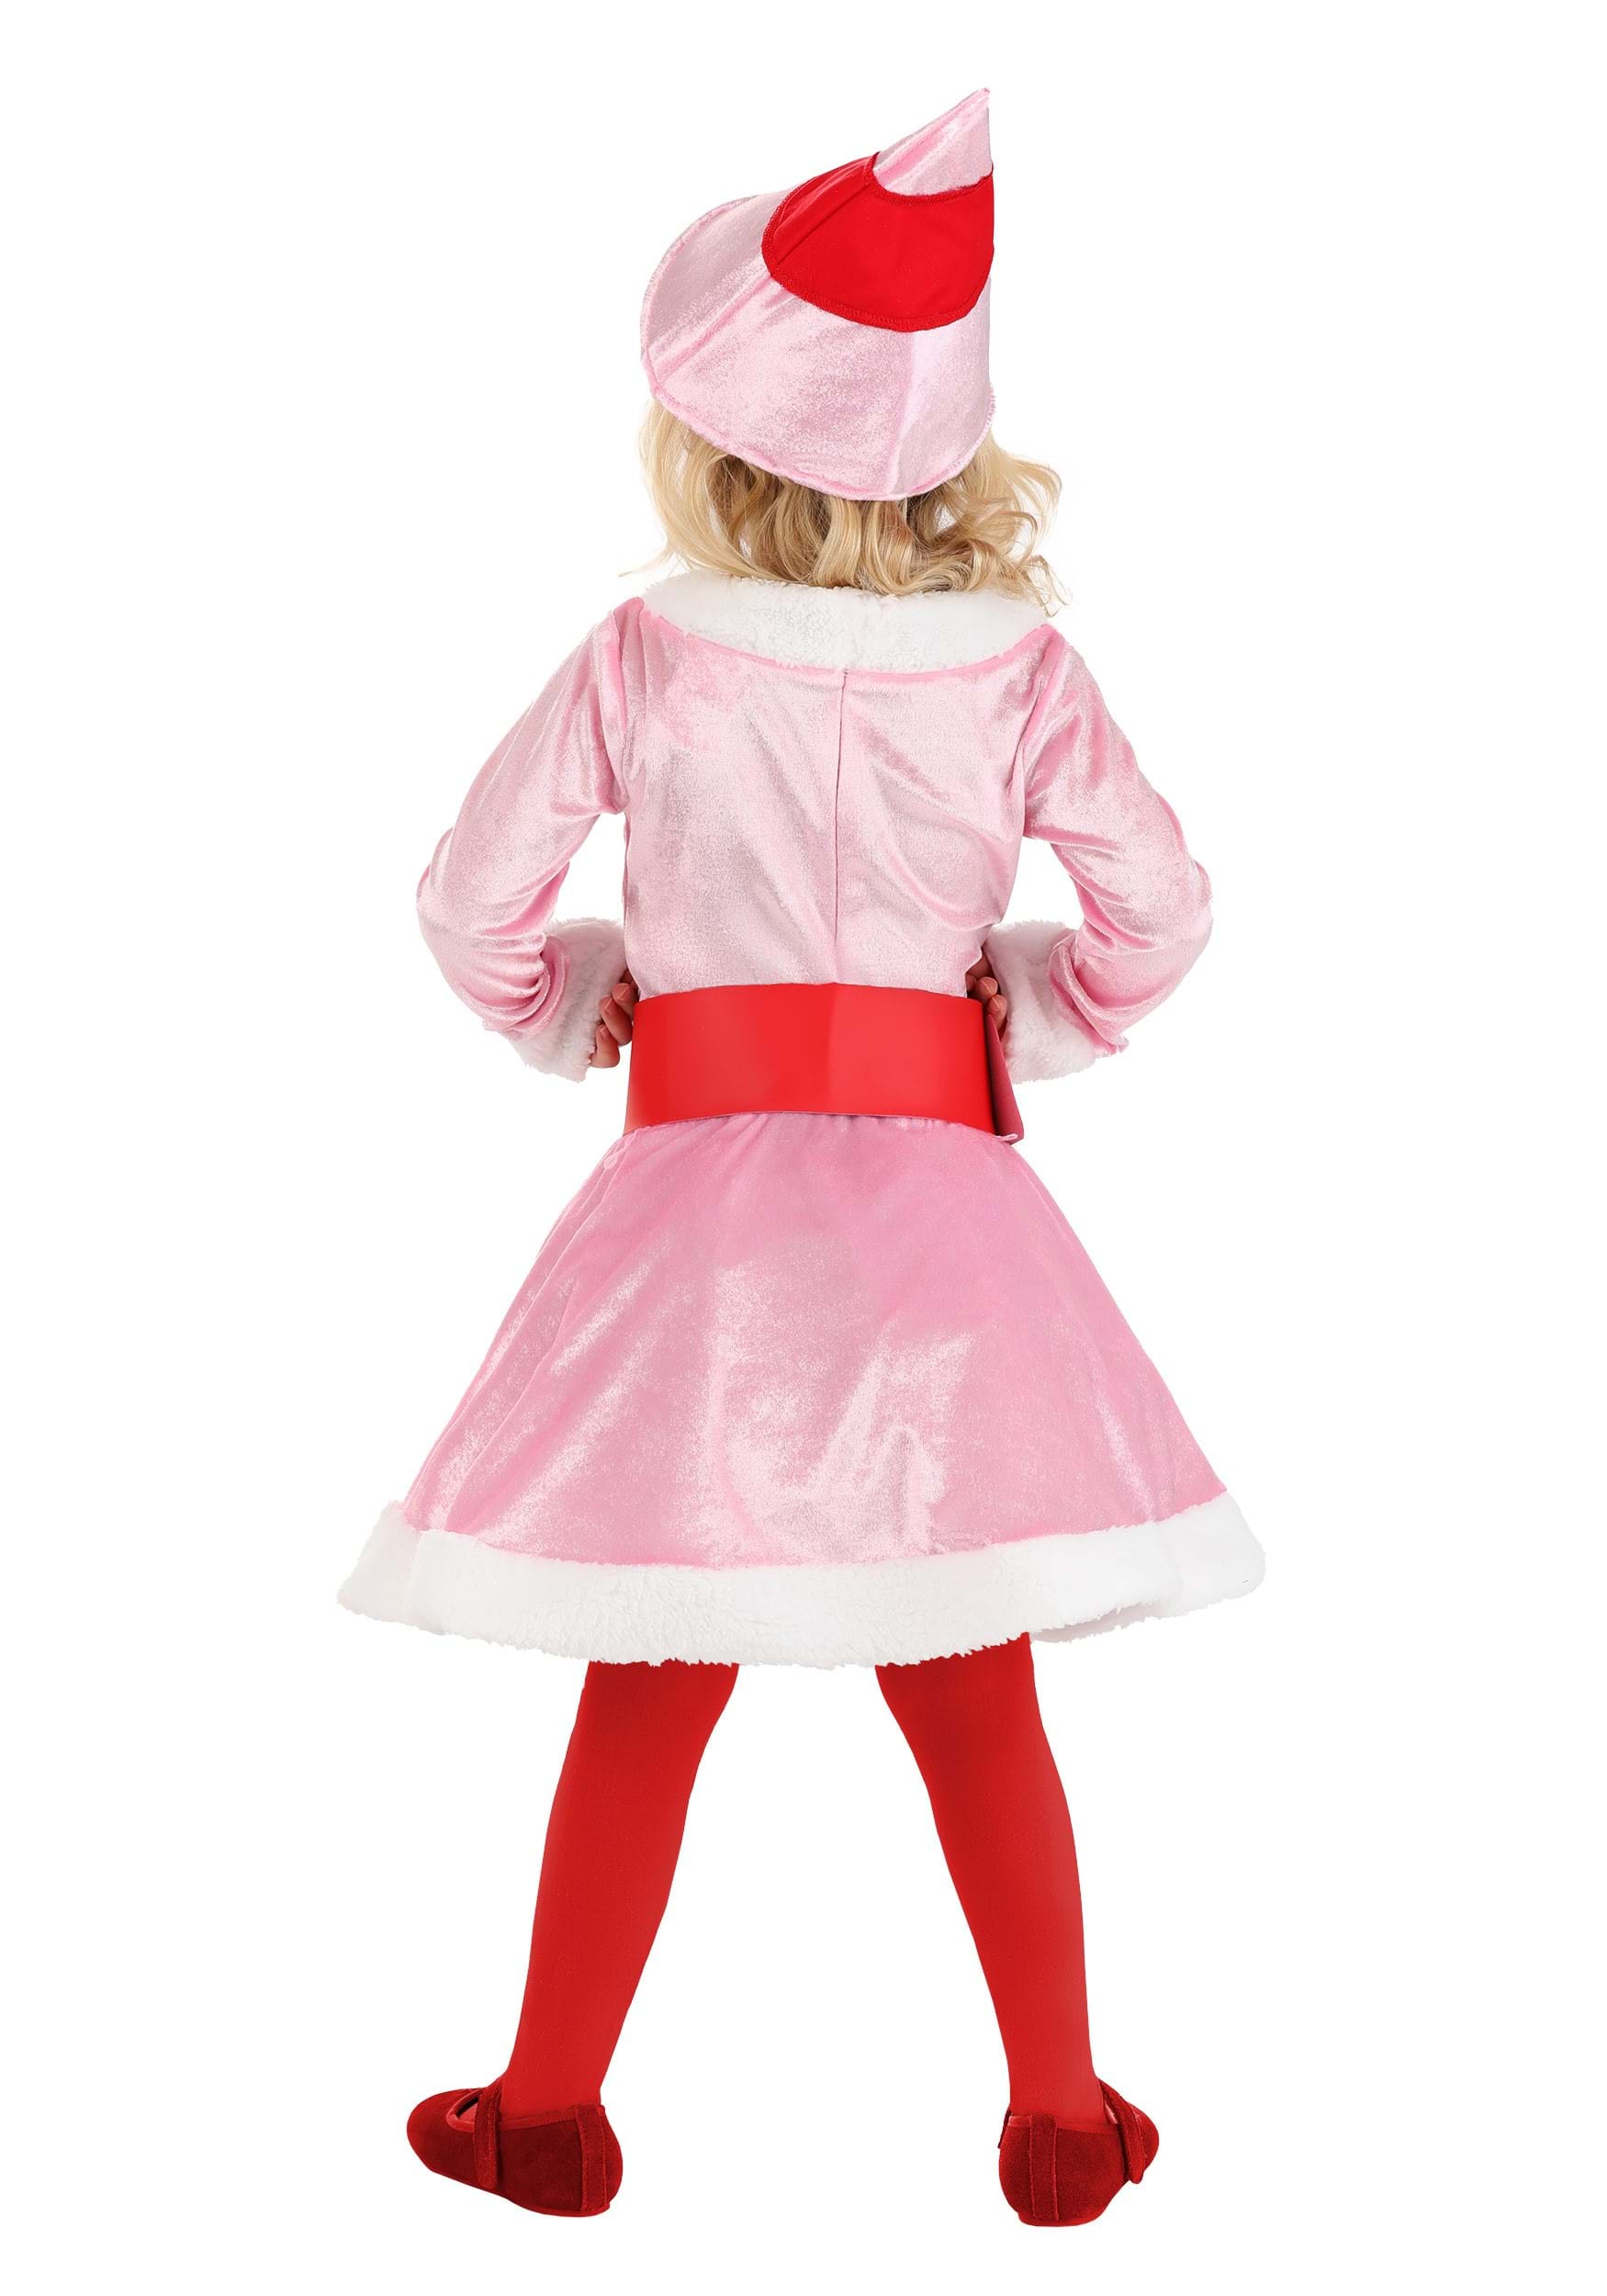 Elf Toddler Jovie Costume For Girls , Christmas Costumes